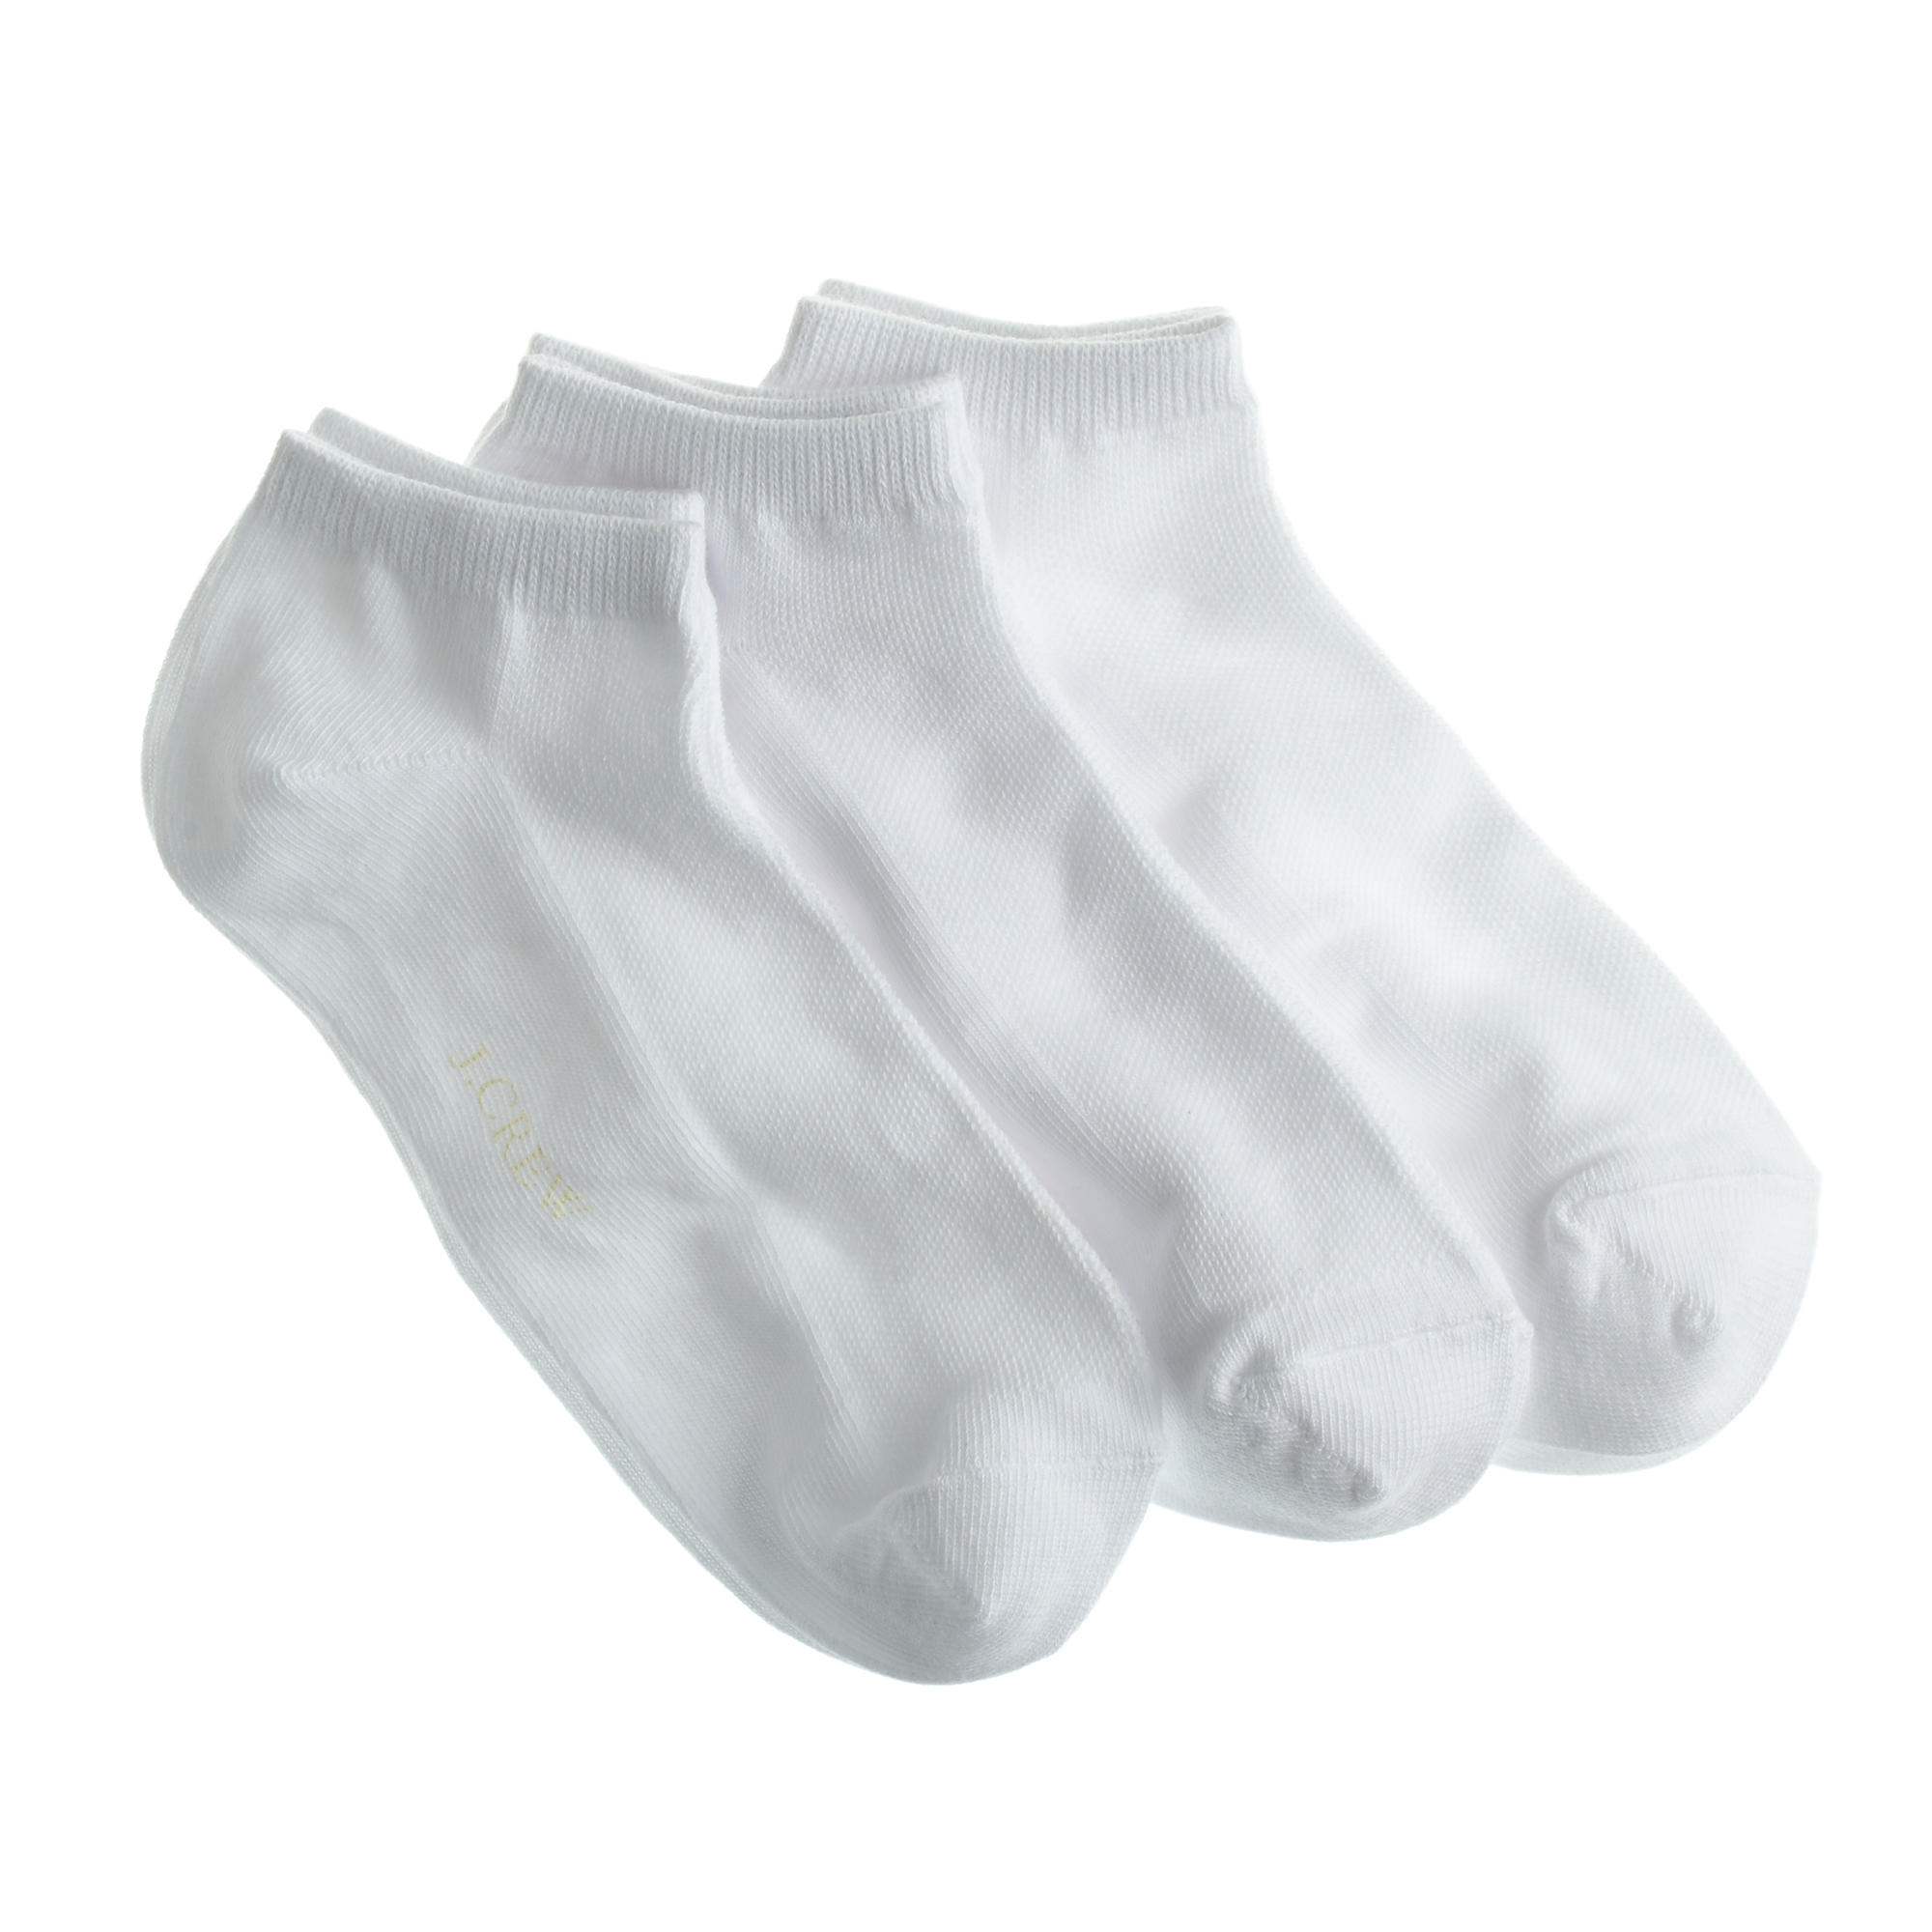 Jcrew Ankle Socks Three Pack In White Lyst 